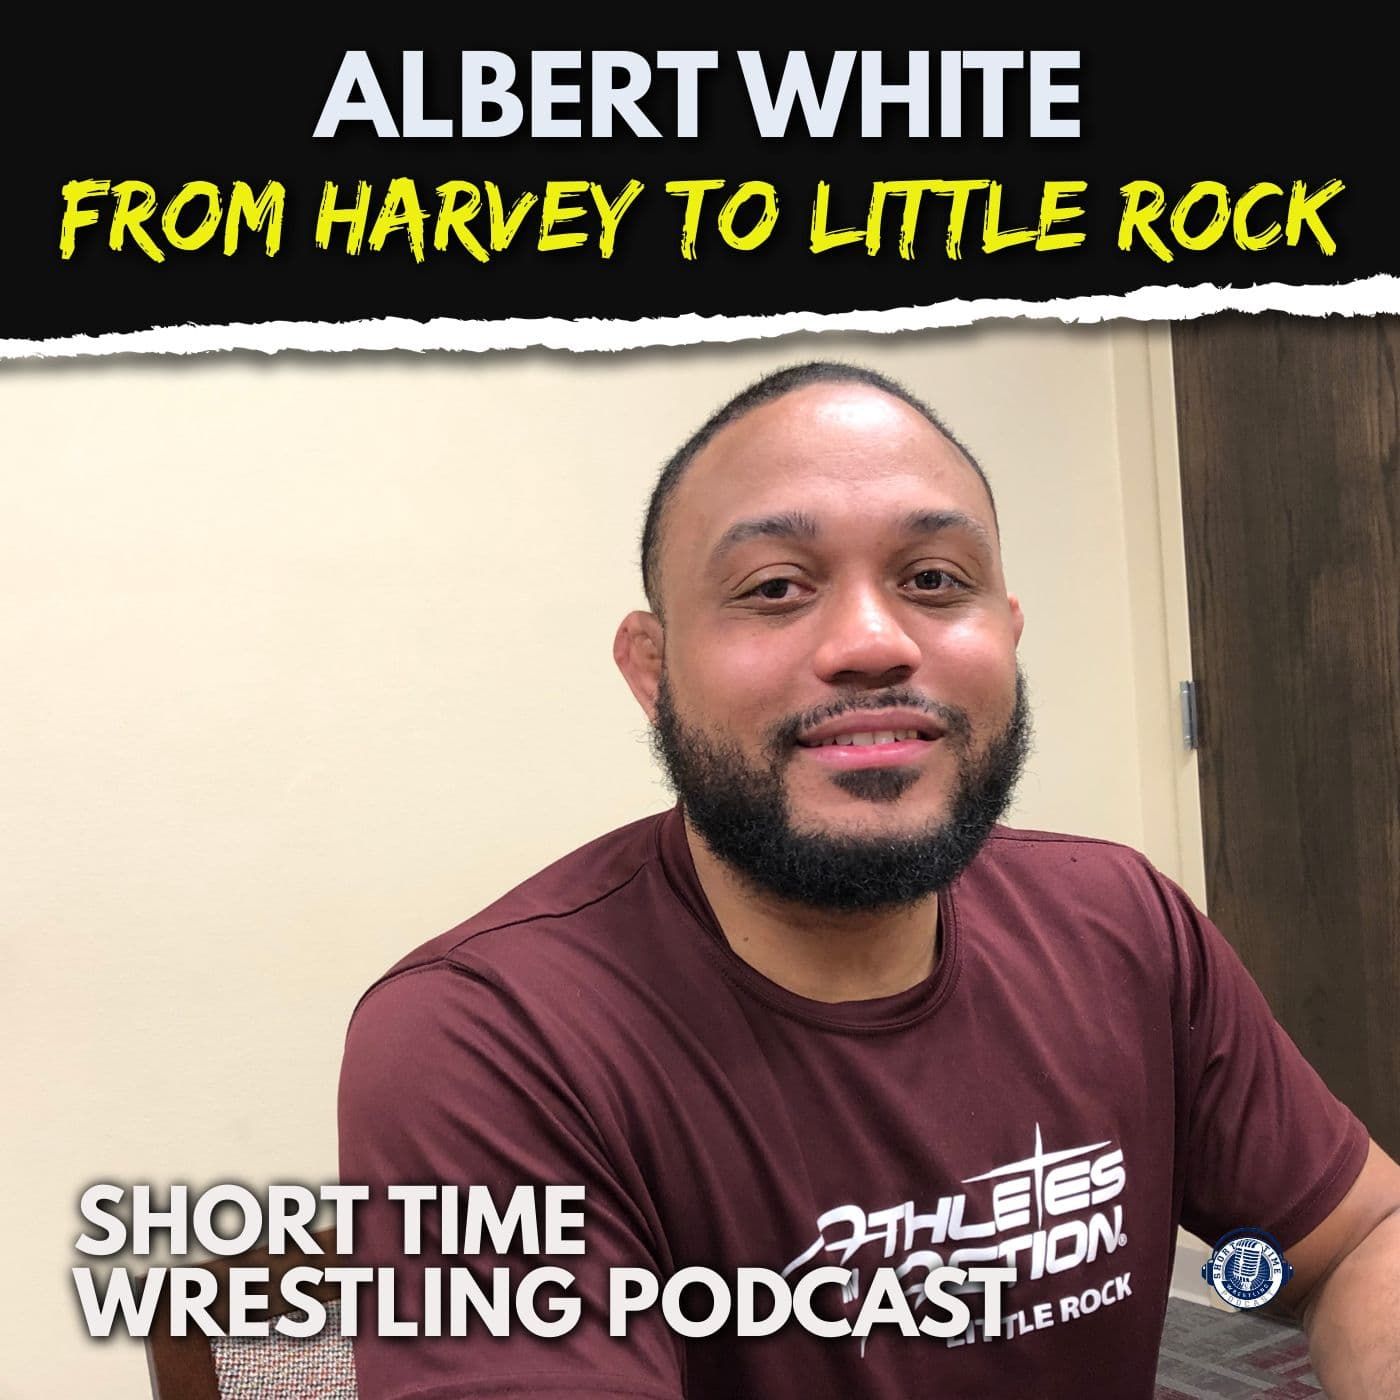 Albert White's journey from Harvey Twister to Little Rock Trojan